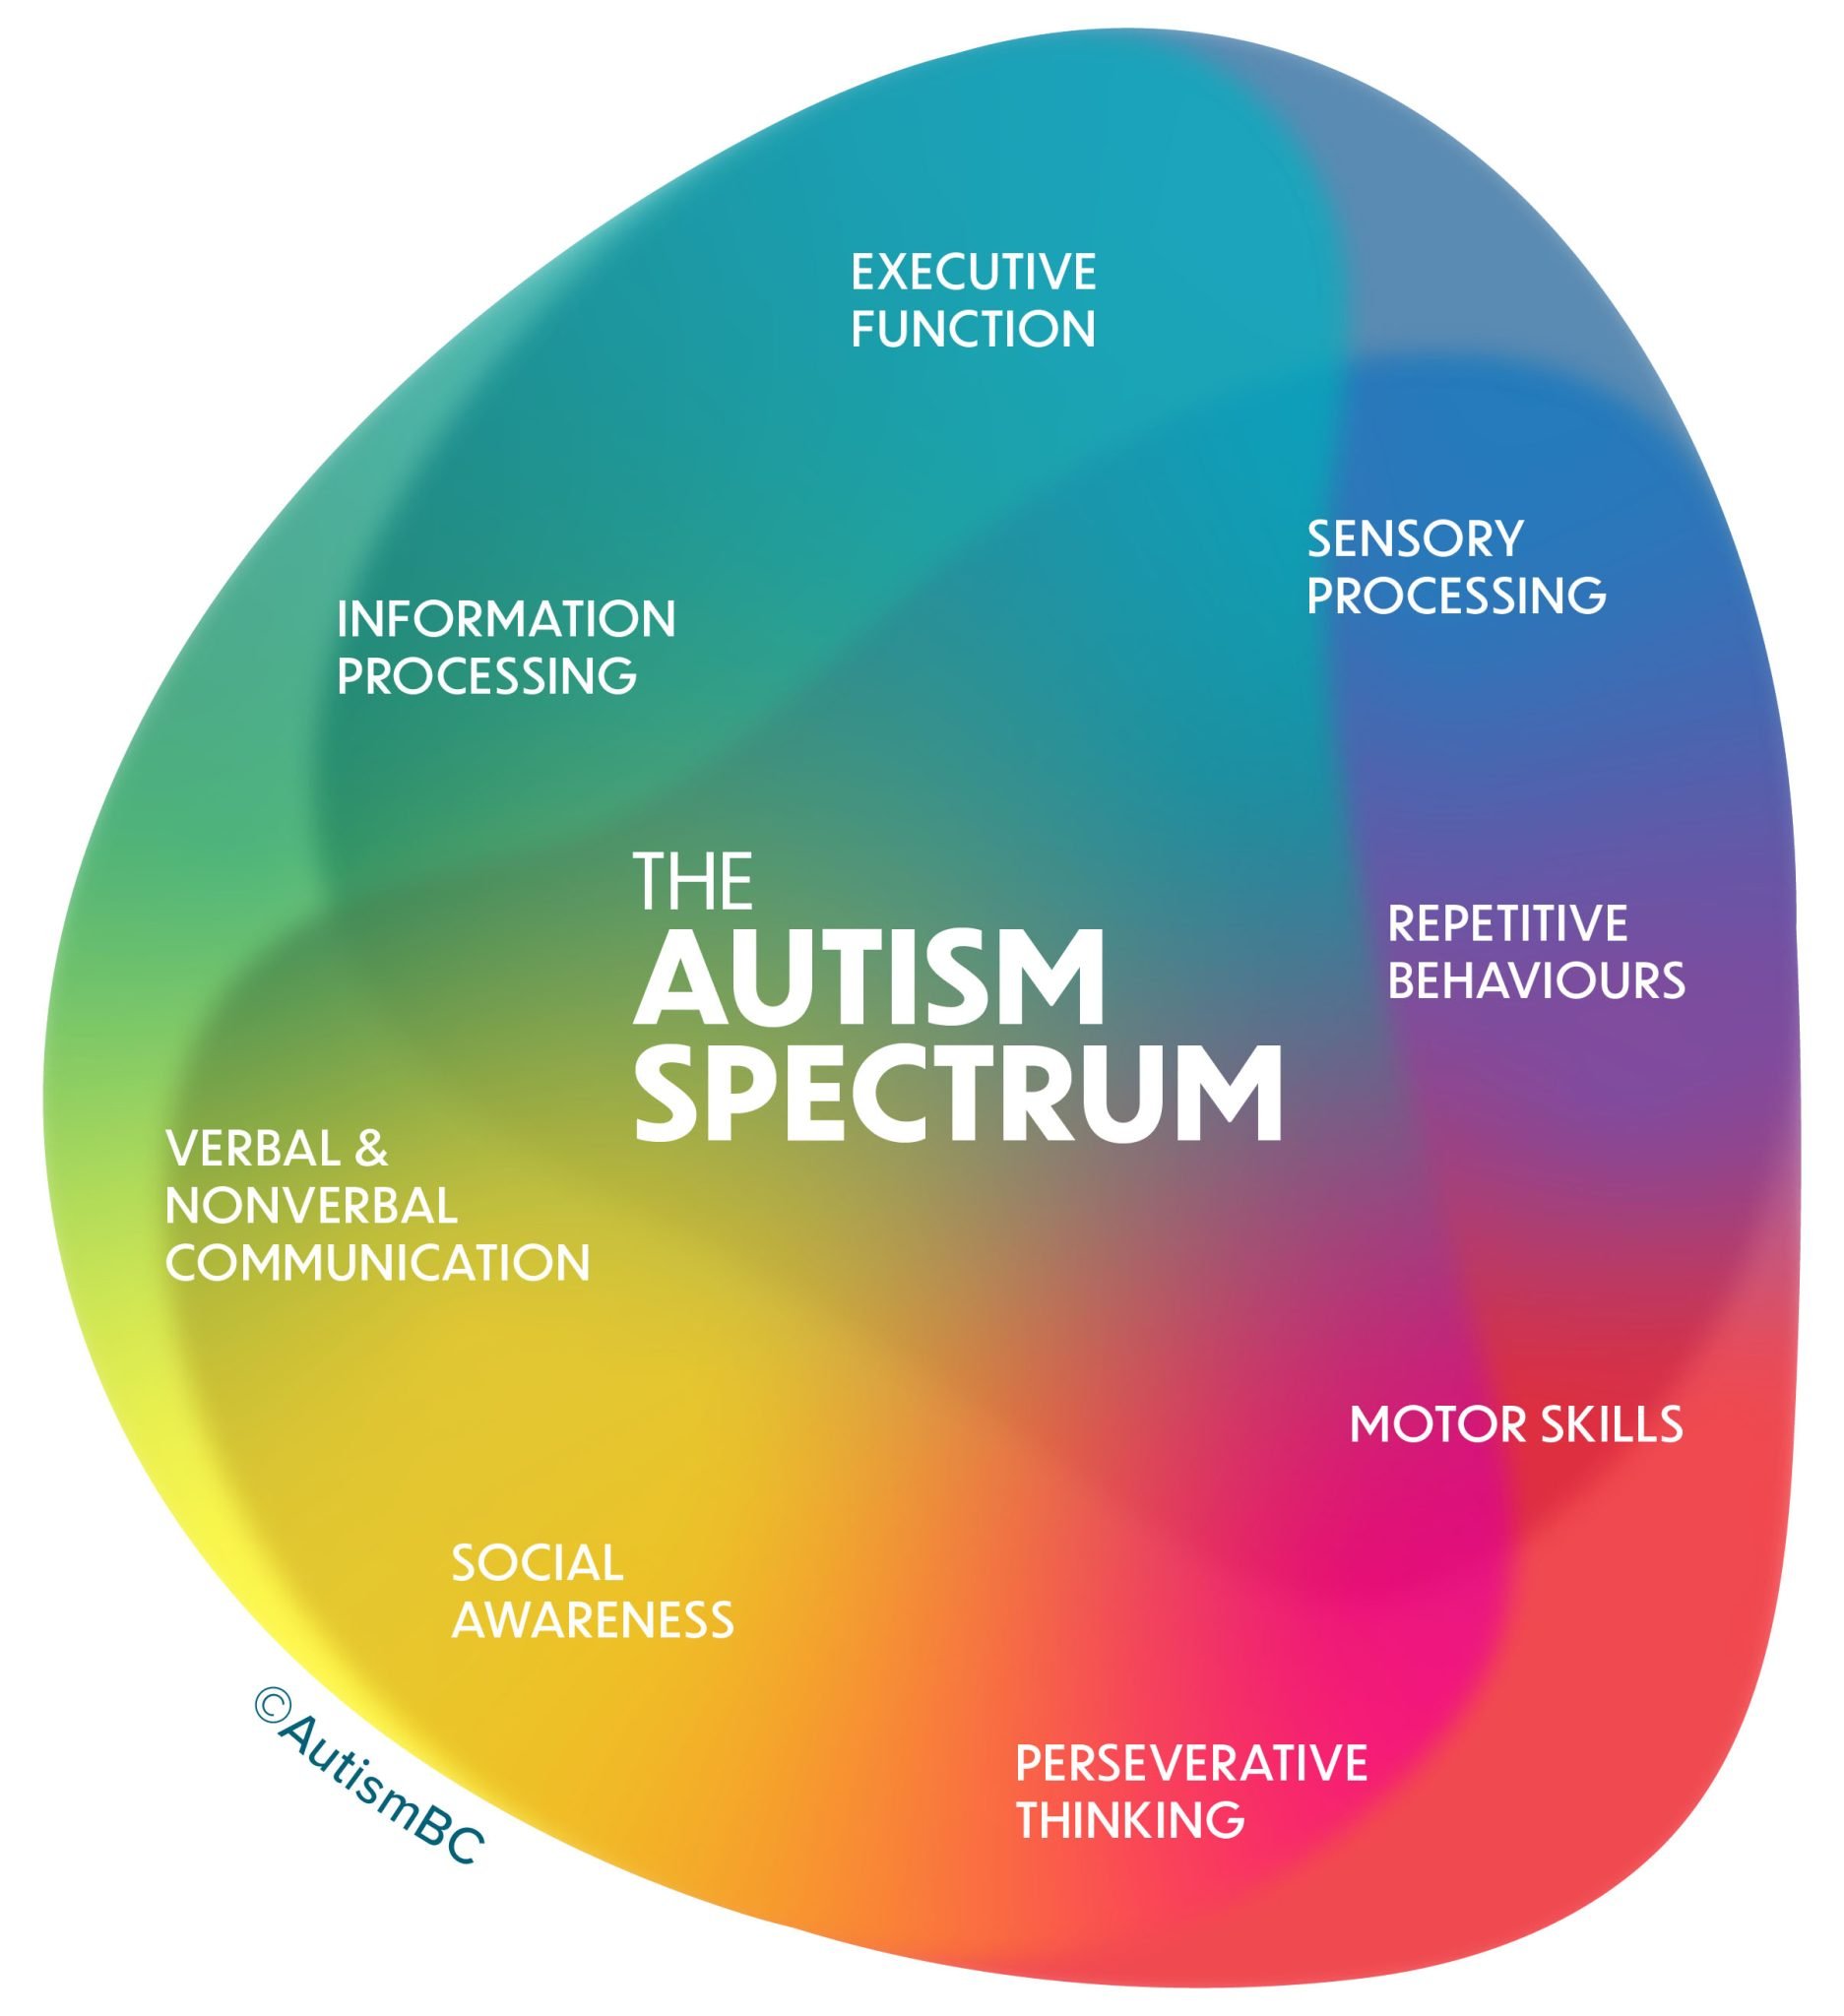 autism spectrum disorder research topics